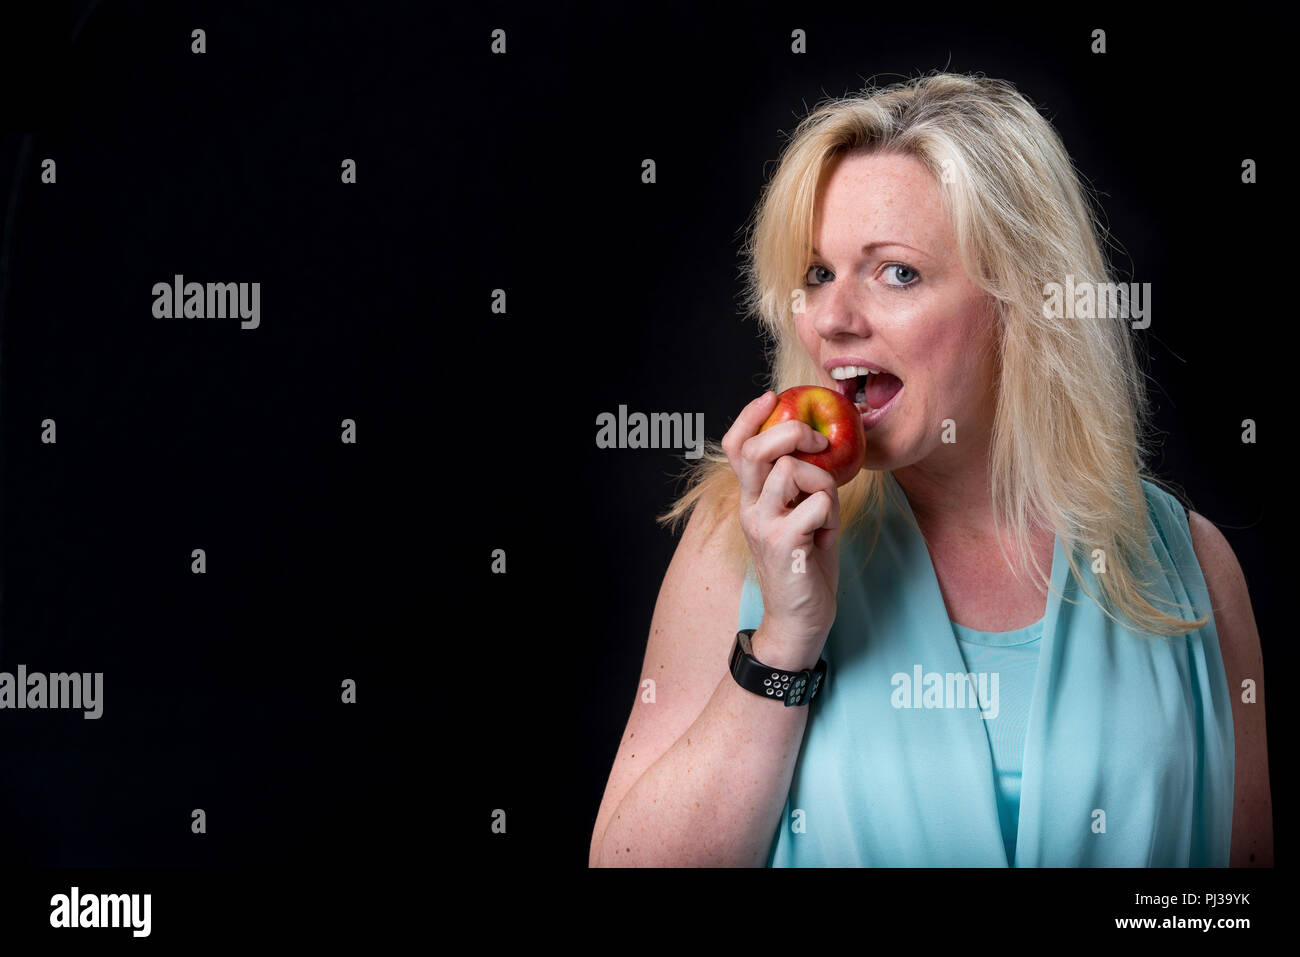 Mujer rubia expresiva morder una manzana contra un fondo negro Foto de stock